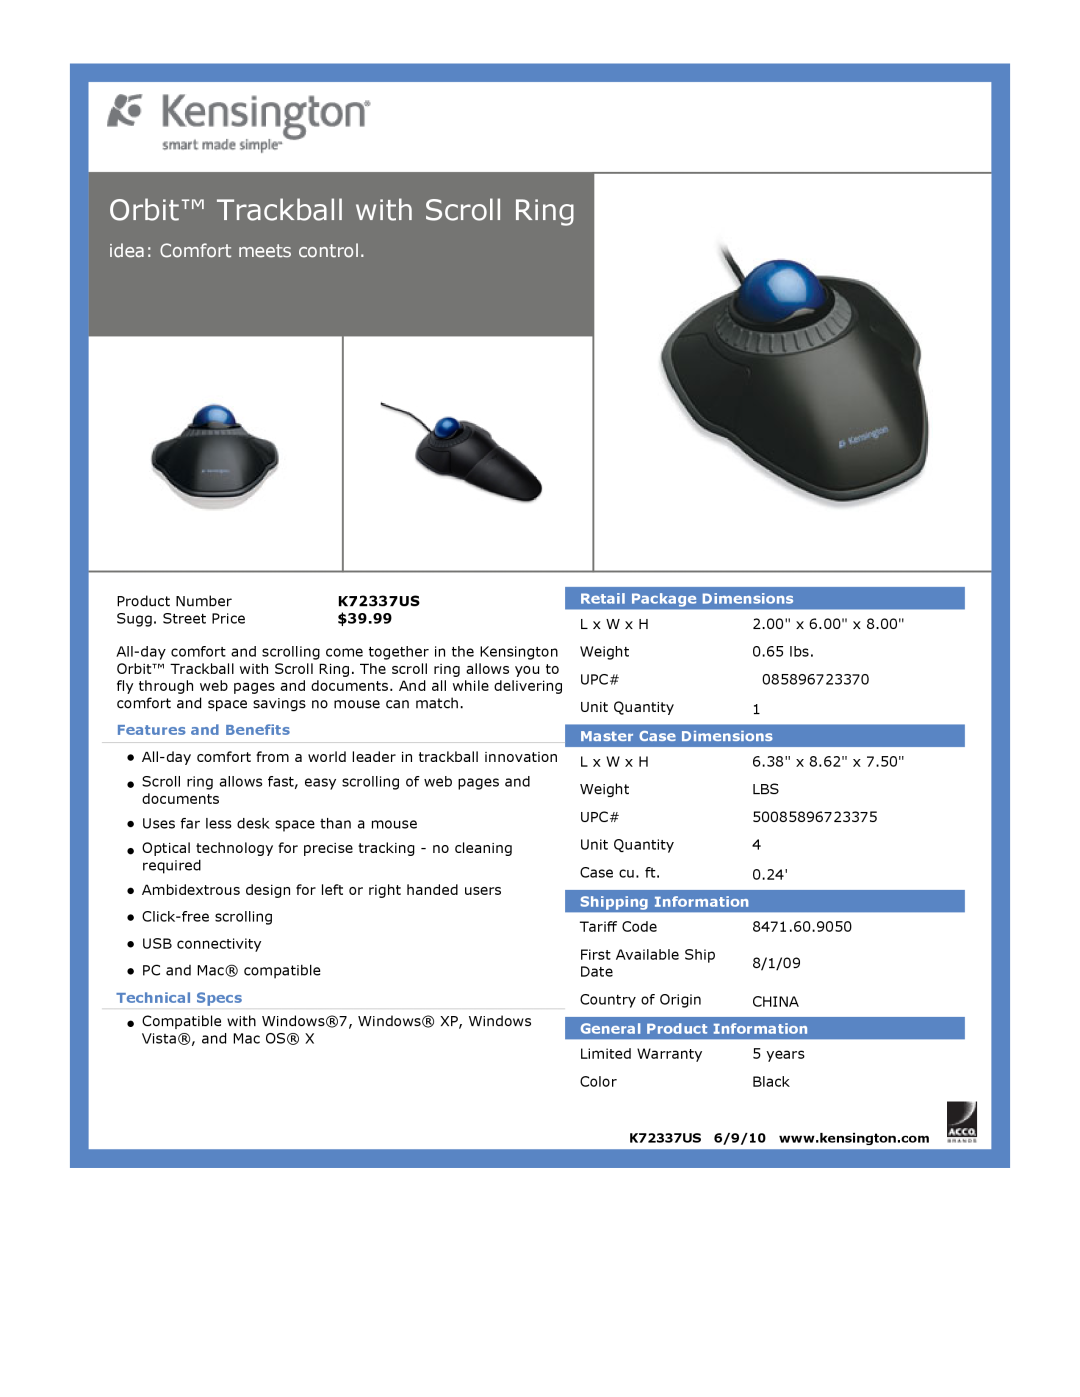 Kensington EU64325 dimensions Orbit Trackball with Scroll Ring, idea: Comfort meets control, $39.99, Features and Benefits 